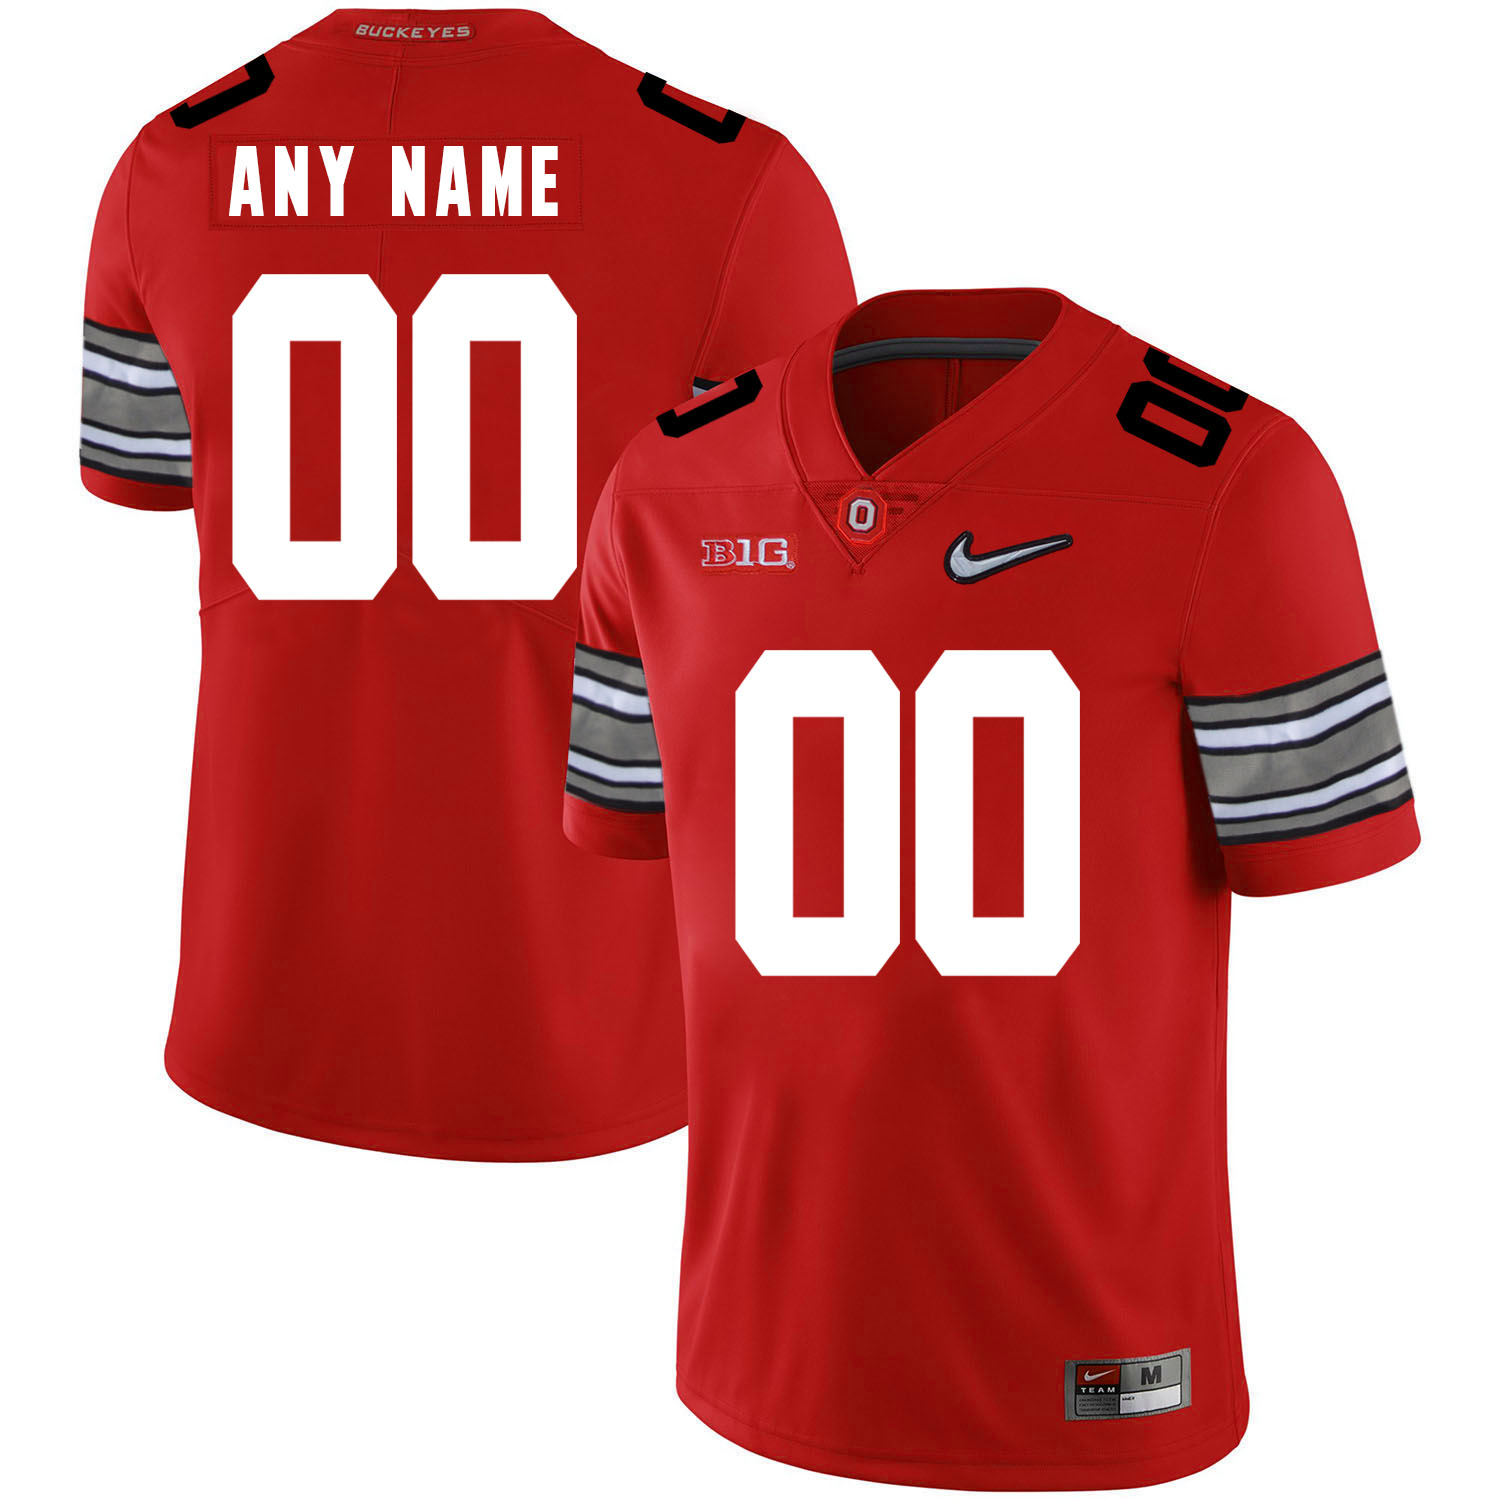 Ohio State Buckeyes White Men's Customized Red Diamond Nike Logo College Football Jersey